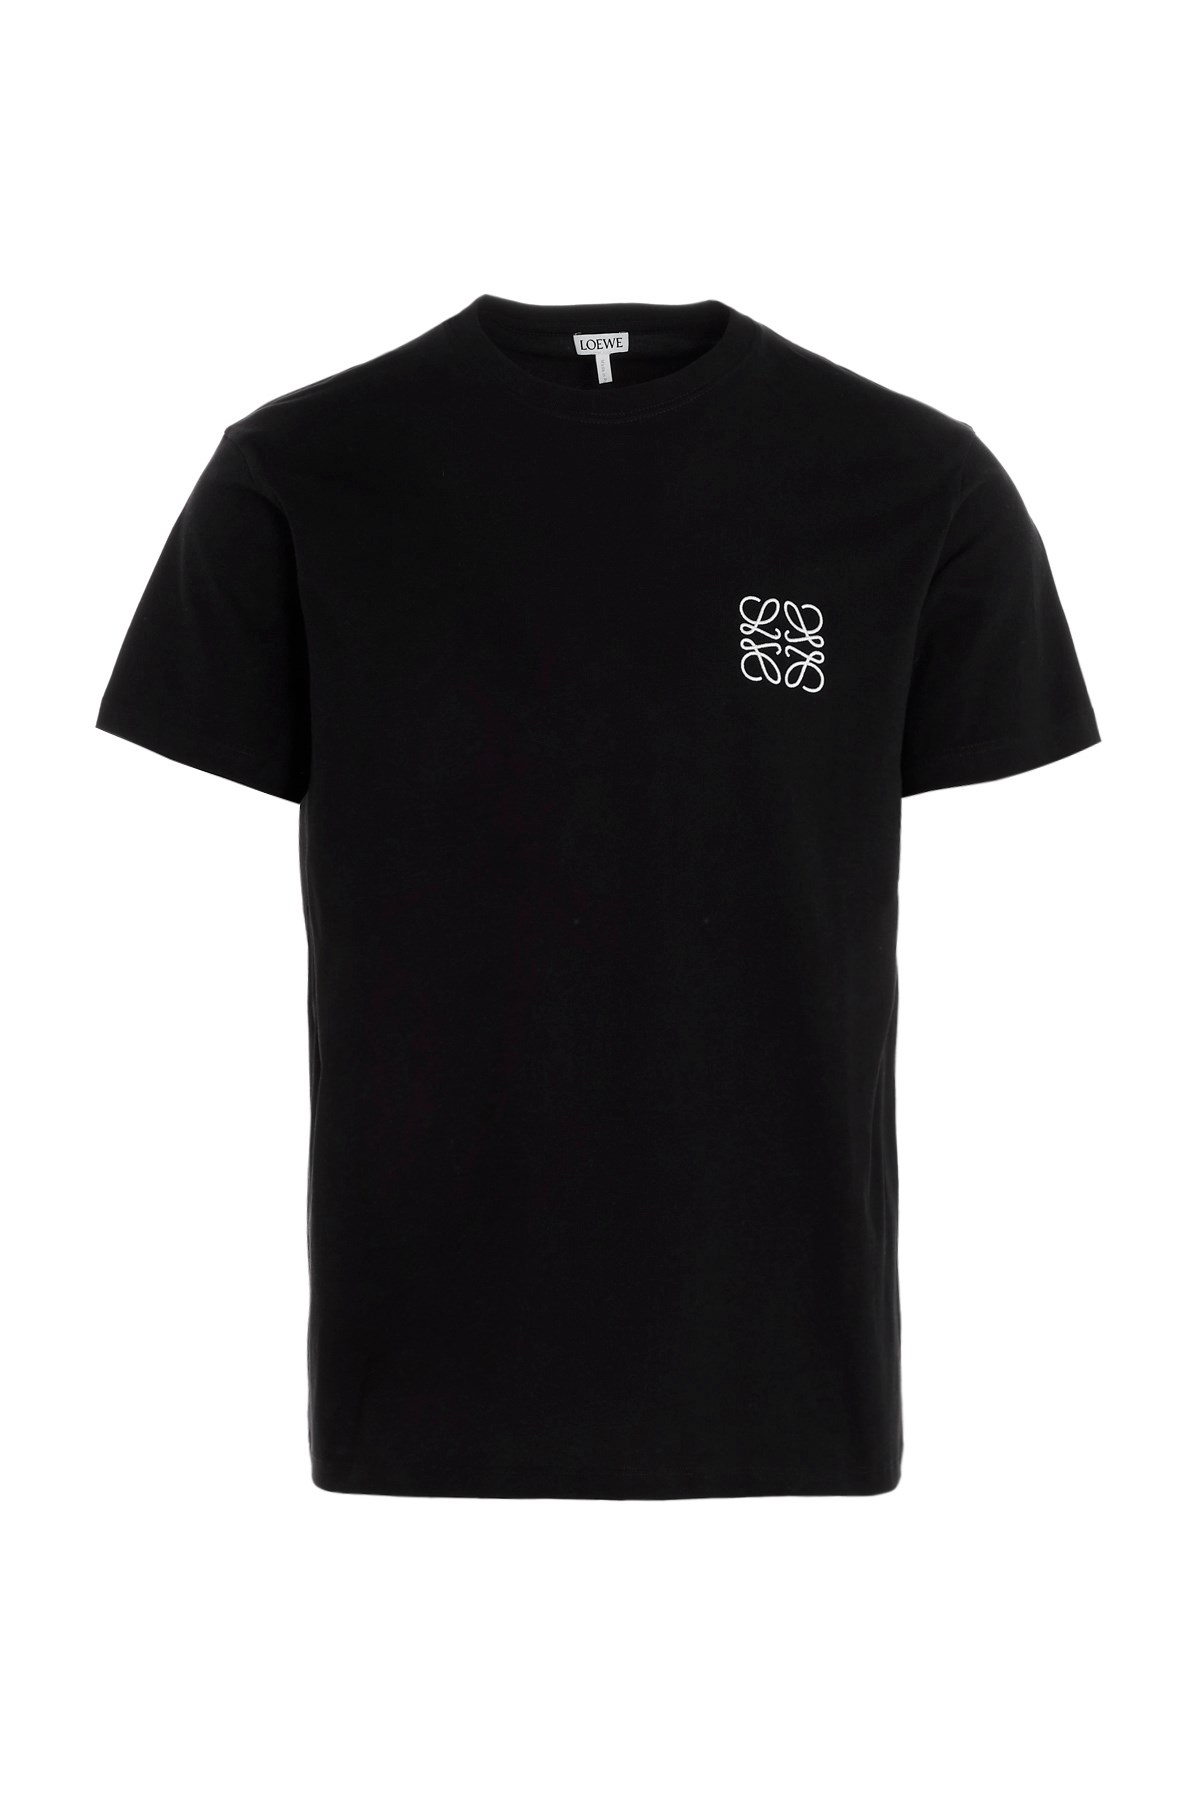 LOEWE 'Anagram’ T-Shirt